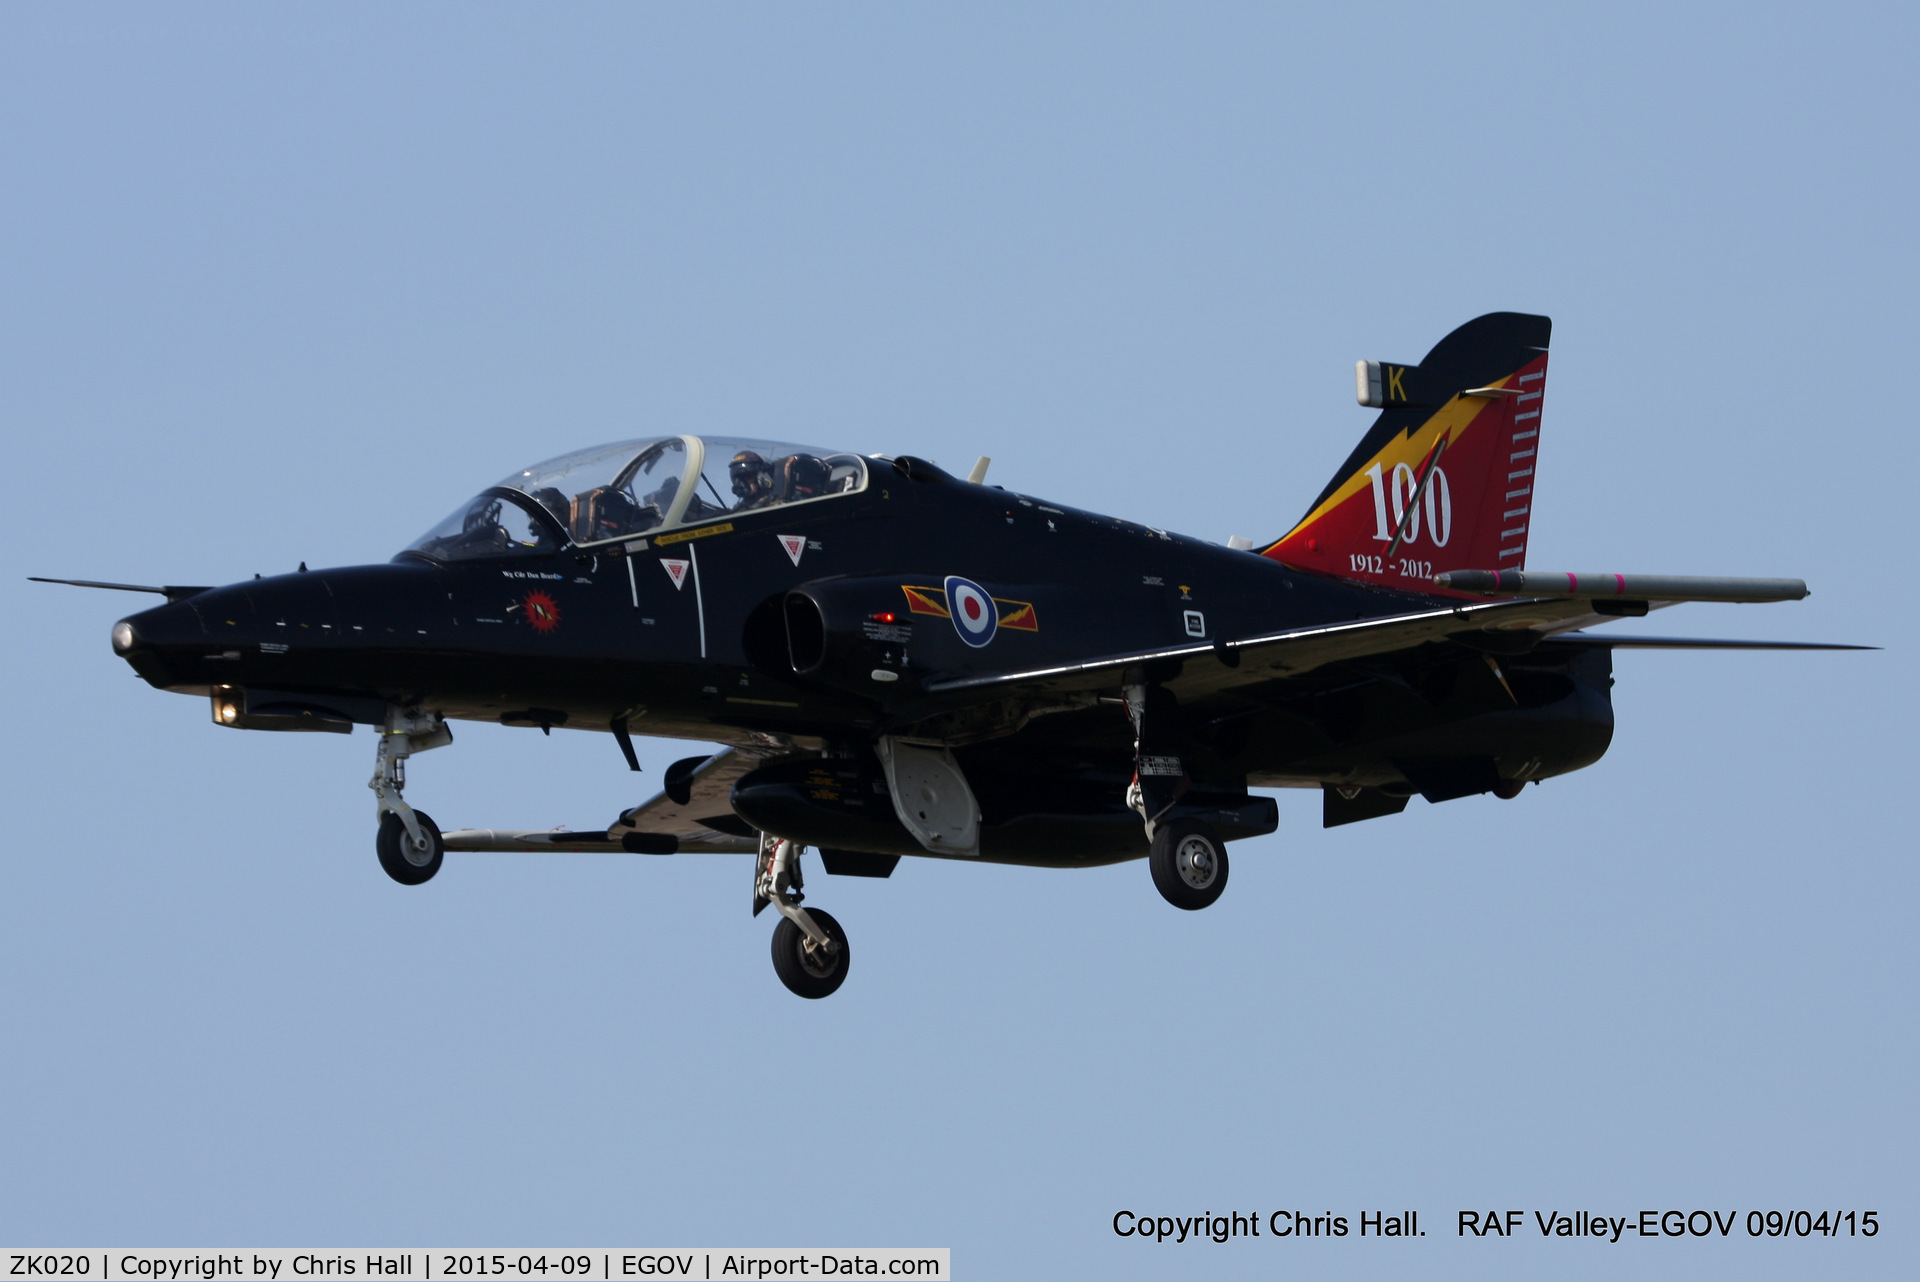 ZK020, 2009 British Aerospace Hawk T2 C/N RT011/1249, RAF IV Sqn with 100 Years Special Tail scheme